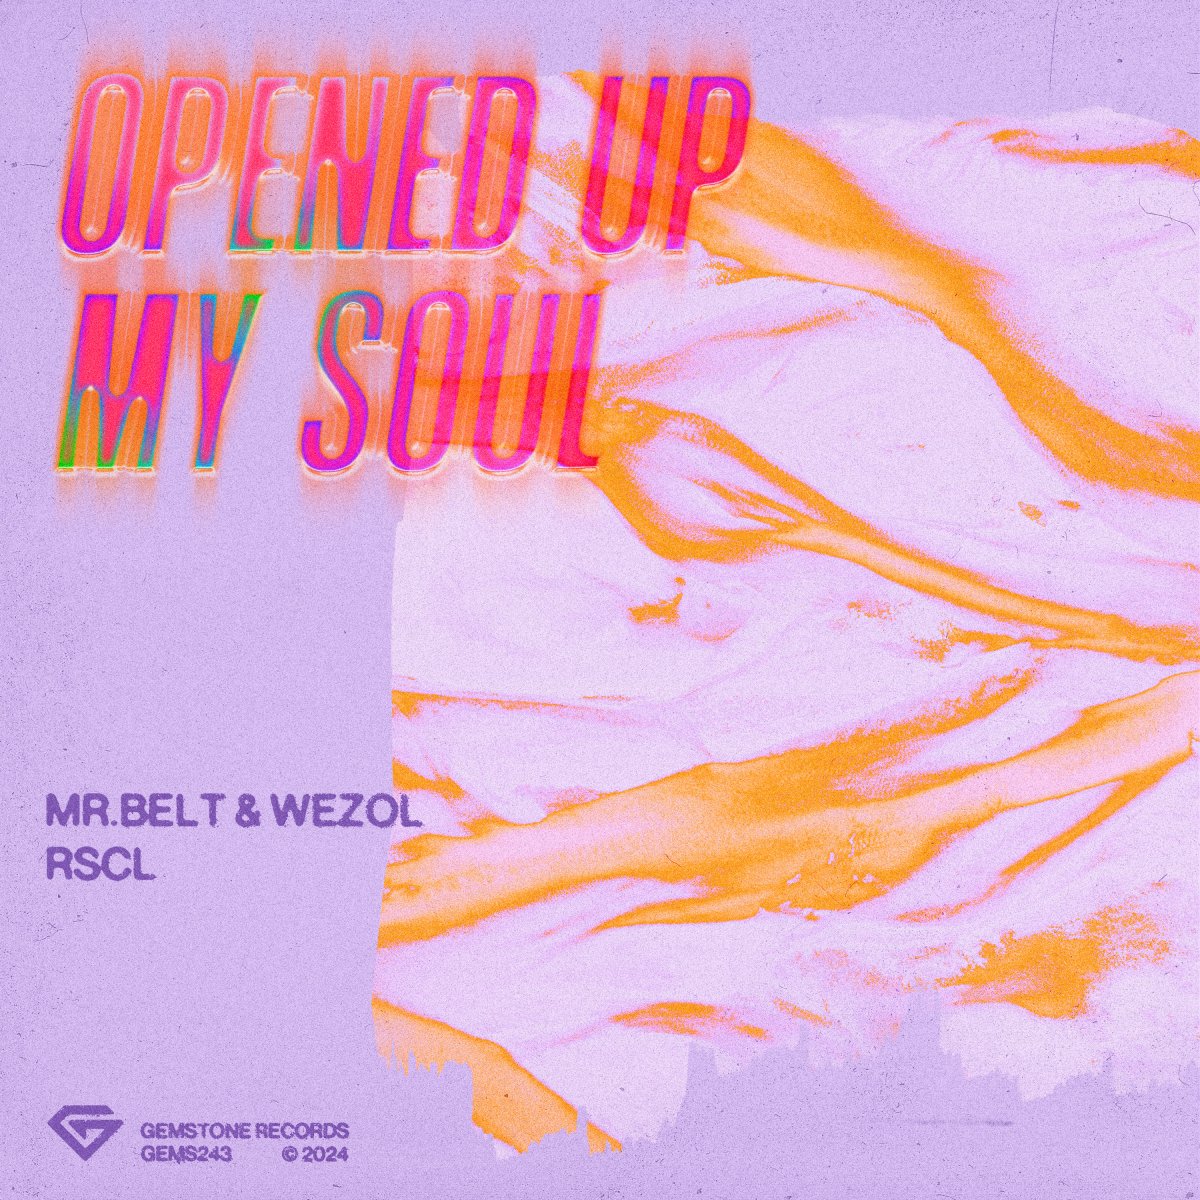 Opened Up My Soul - Mr. Belt & Wezol ⁠& RSCL⁠ 